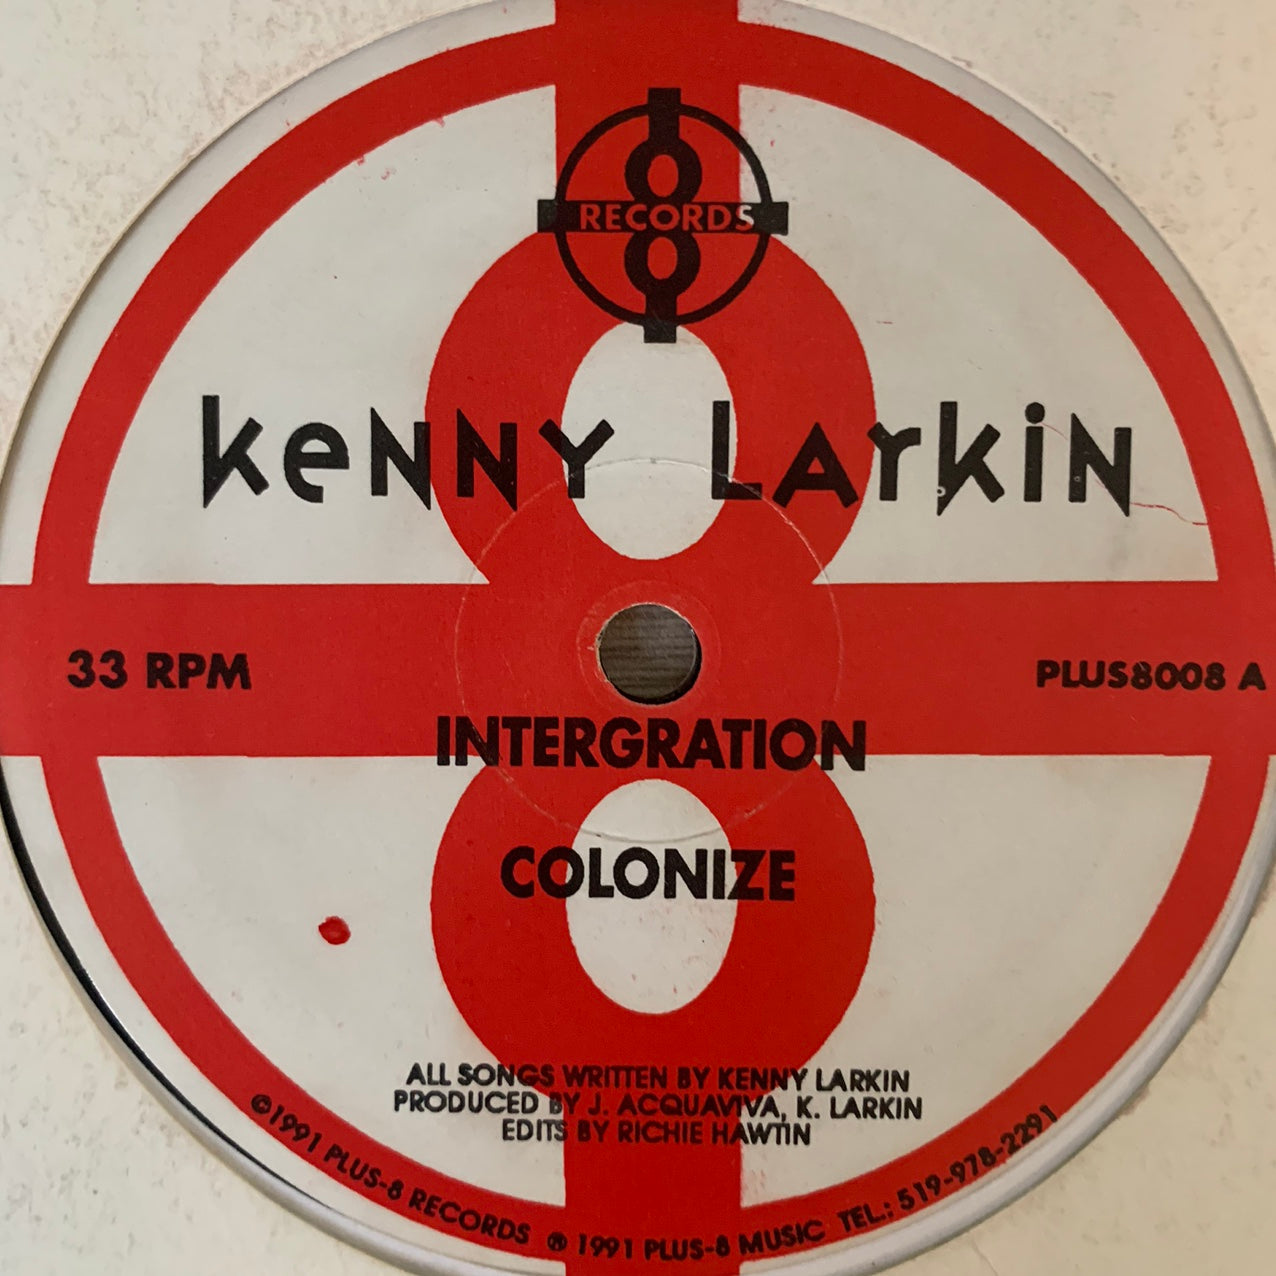 Kenny Larkin “Intergration” / “Colonize” on Plus 8 Records 4 Track 12inch Vinyl